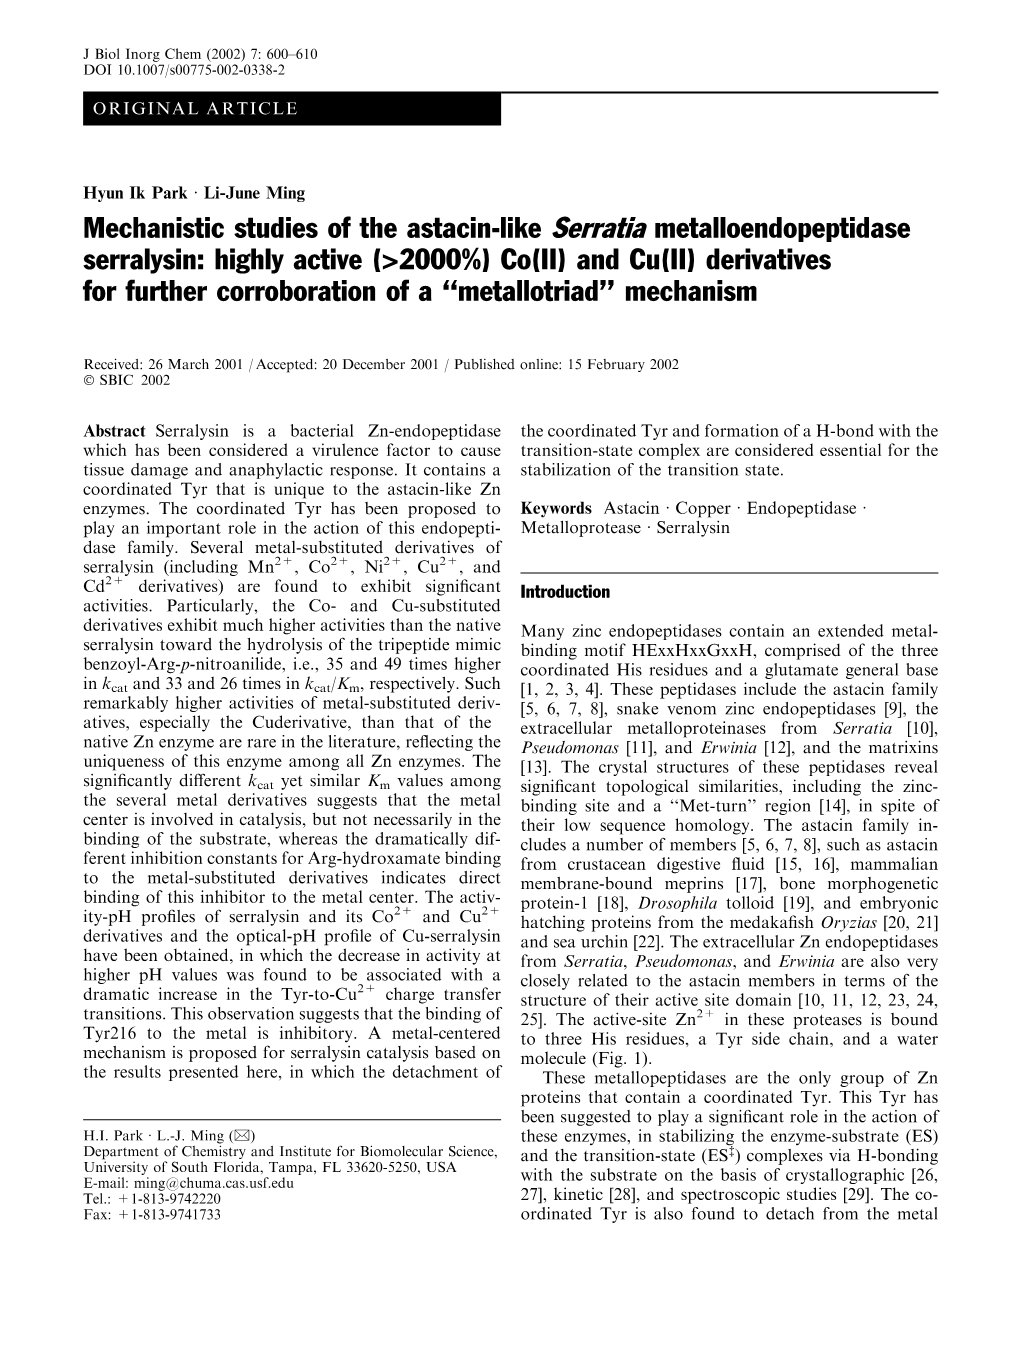 Mechanistic Studies of the Astacin-Like Serratia Metalloendopeptidase